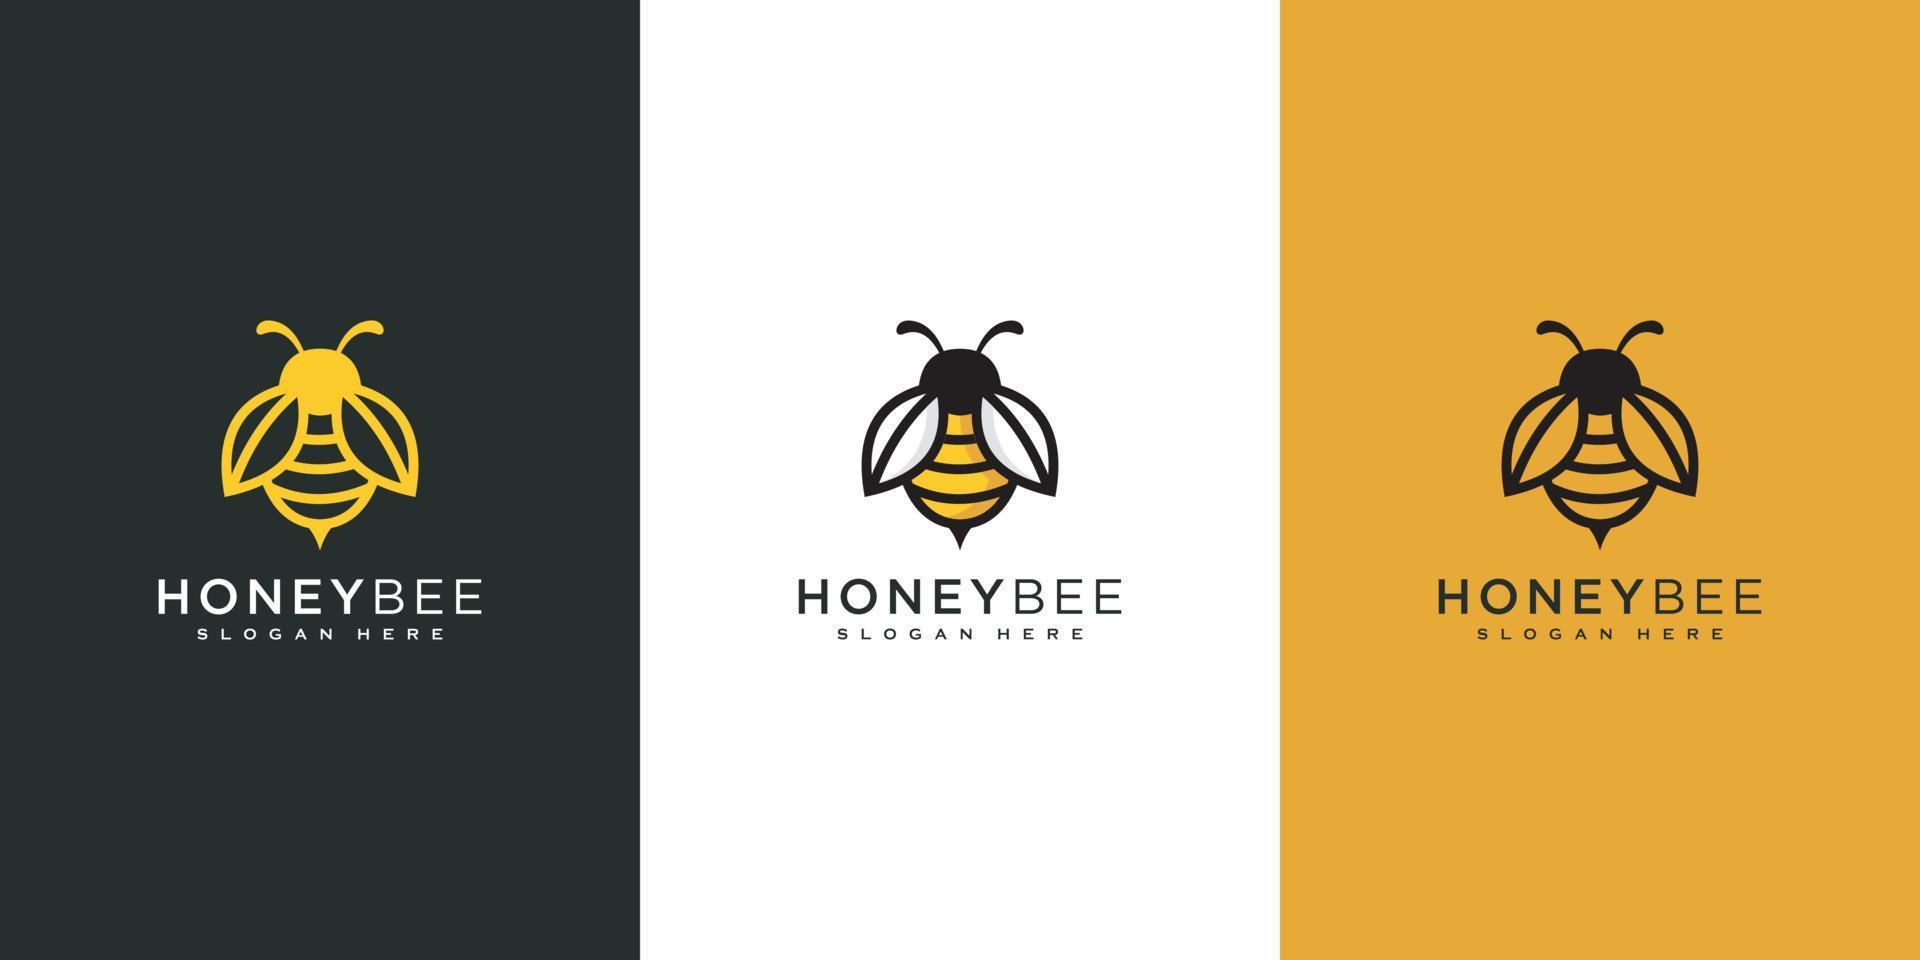 honey Bee animals logo vector